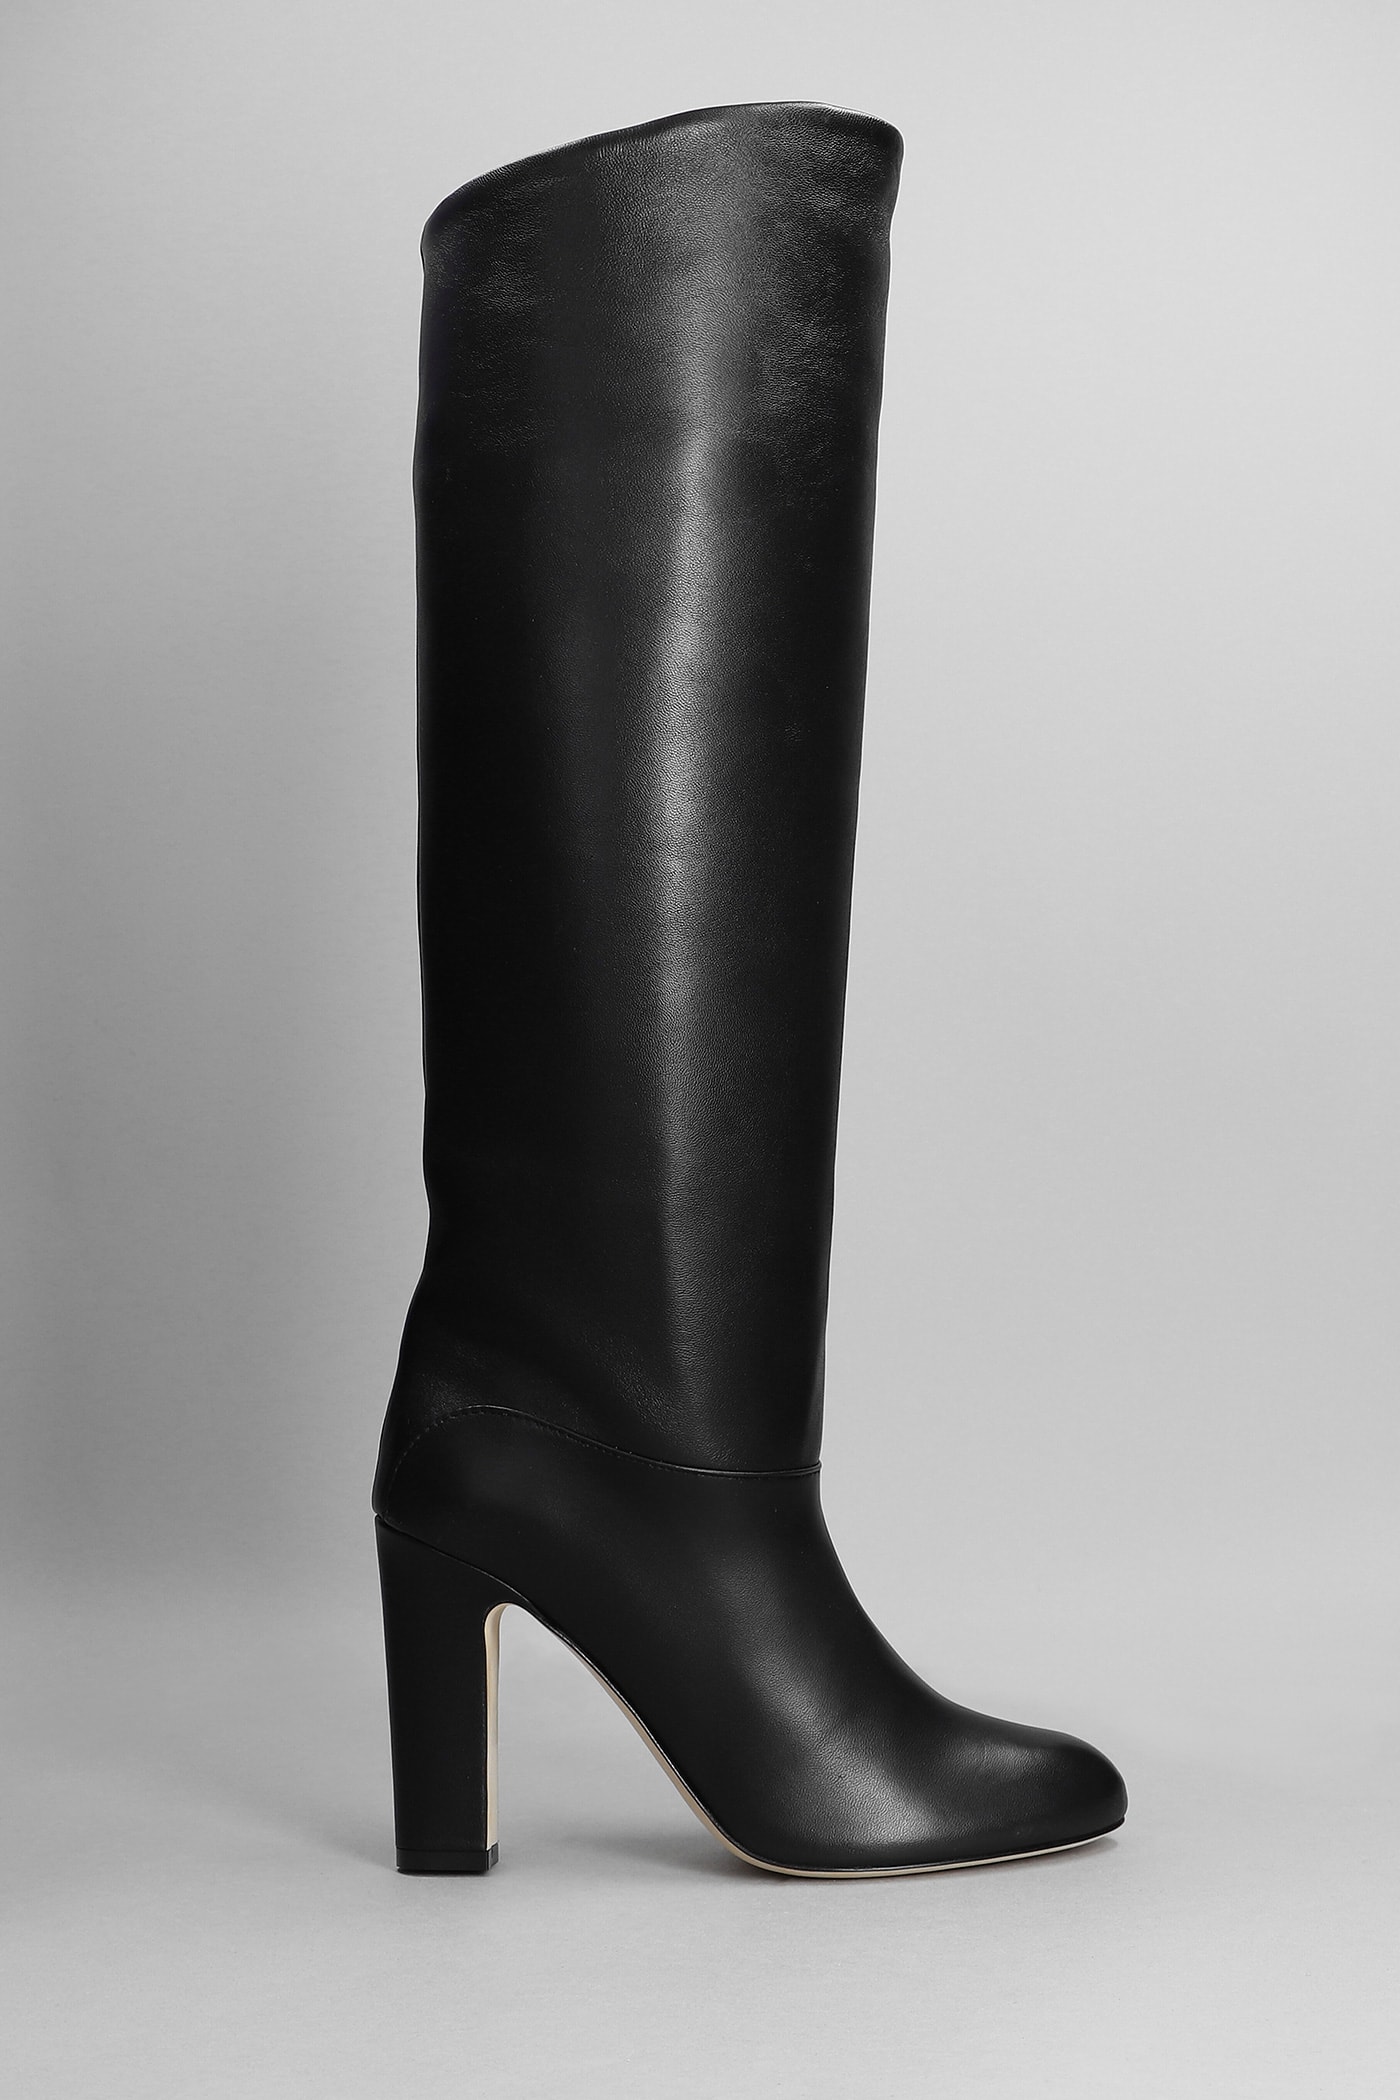 Paris Texas Kiki High Heels Boots In Black Leather